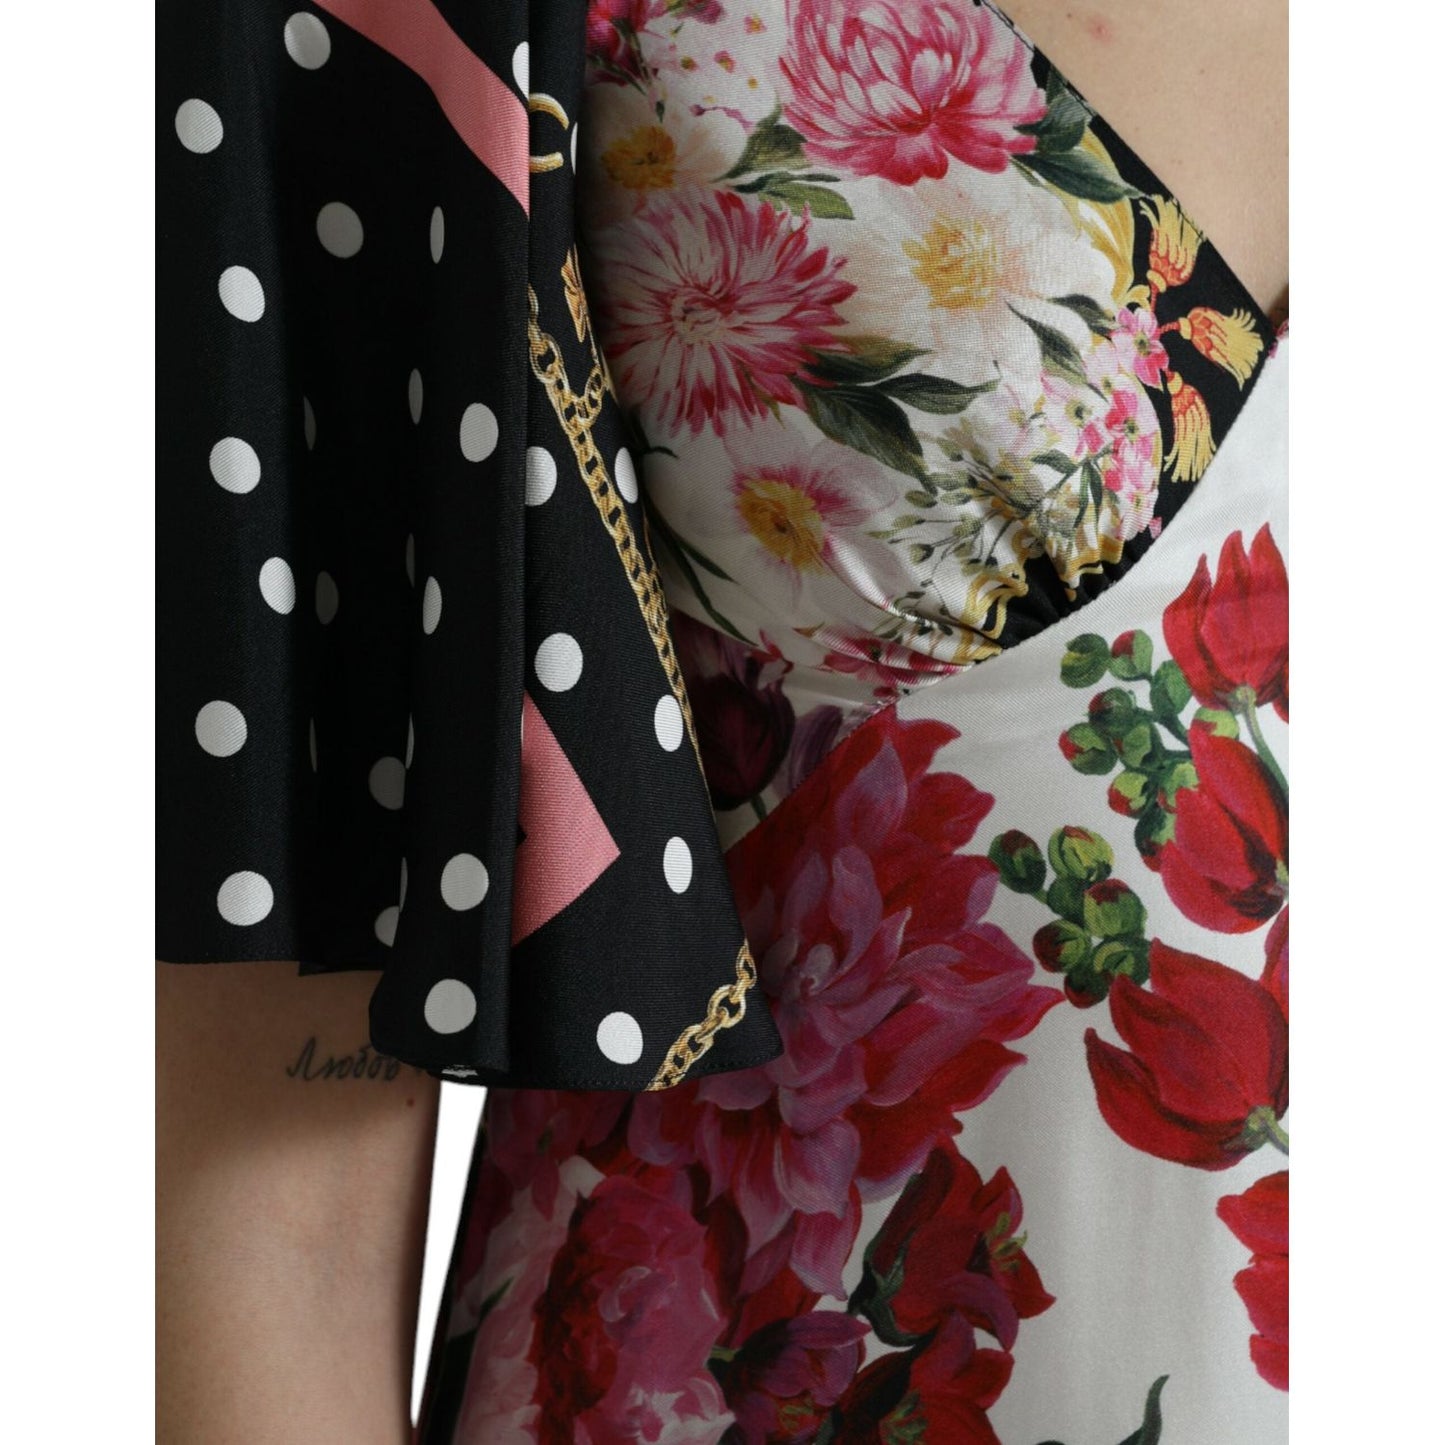 Dolce & Gabbana Elegant Floral Silk Maxi Dress multicolor-floral-print-silk-twill-gown-dress